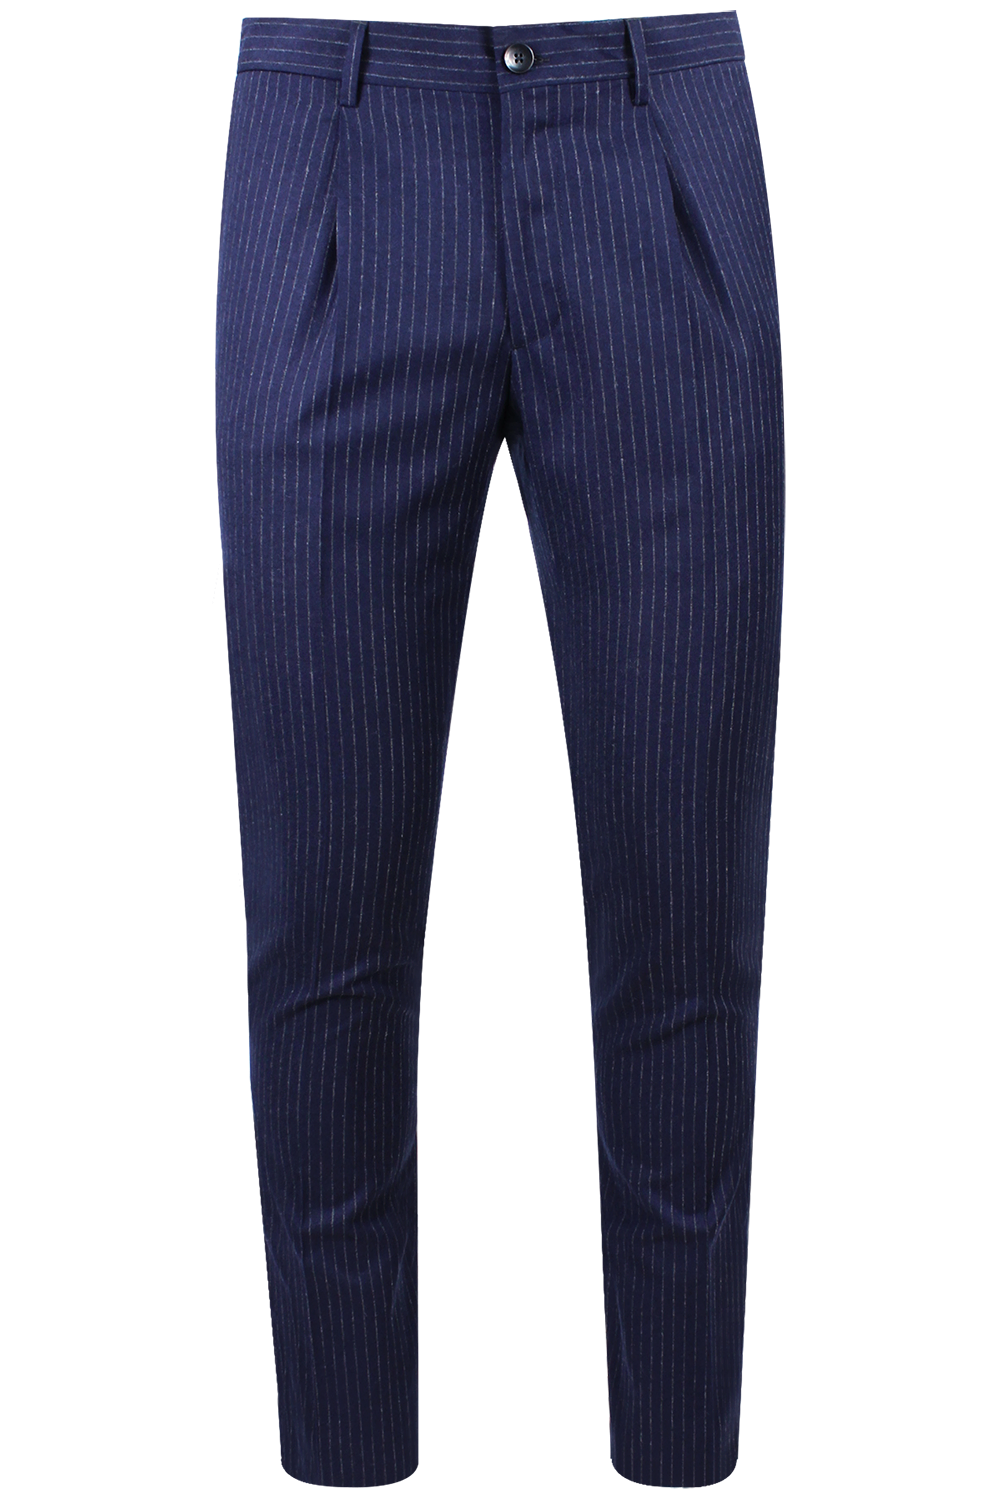 Pantalone con pince in lana blu gessata